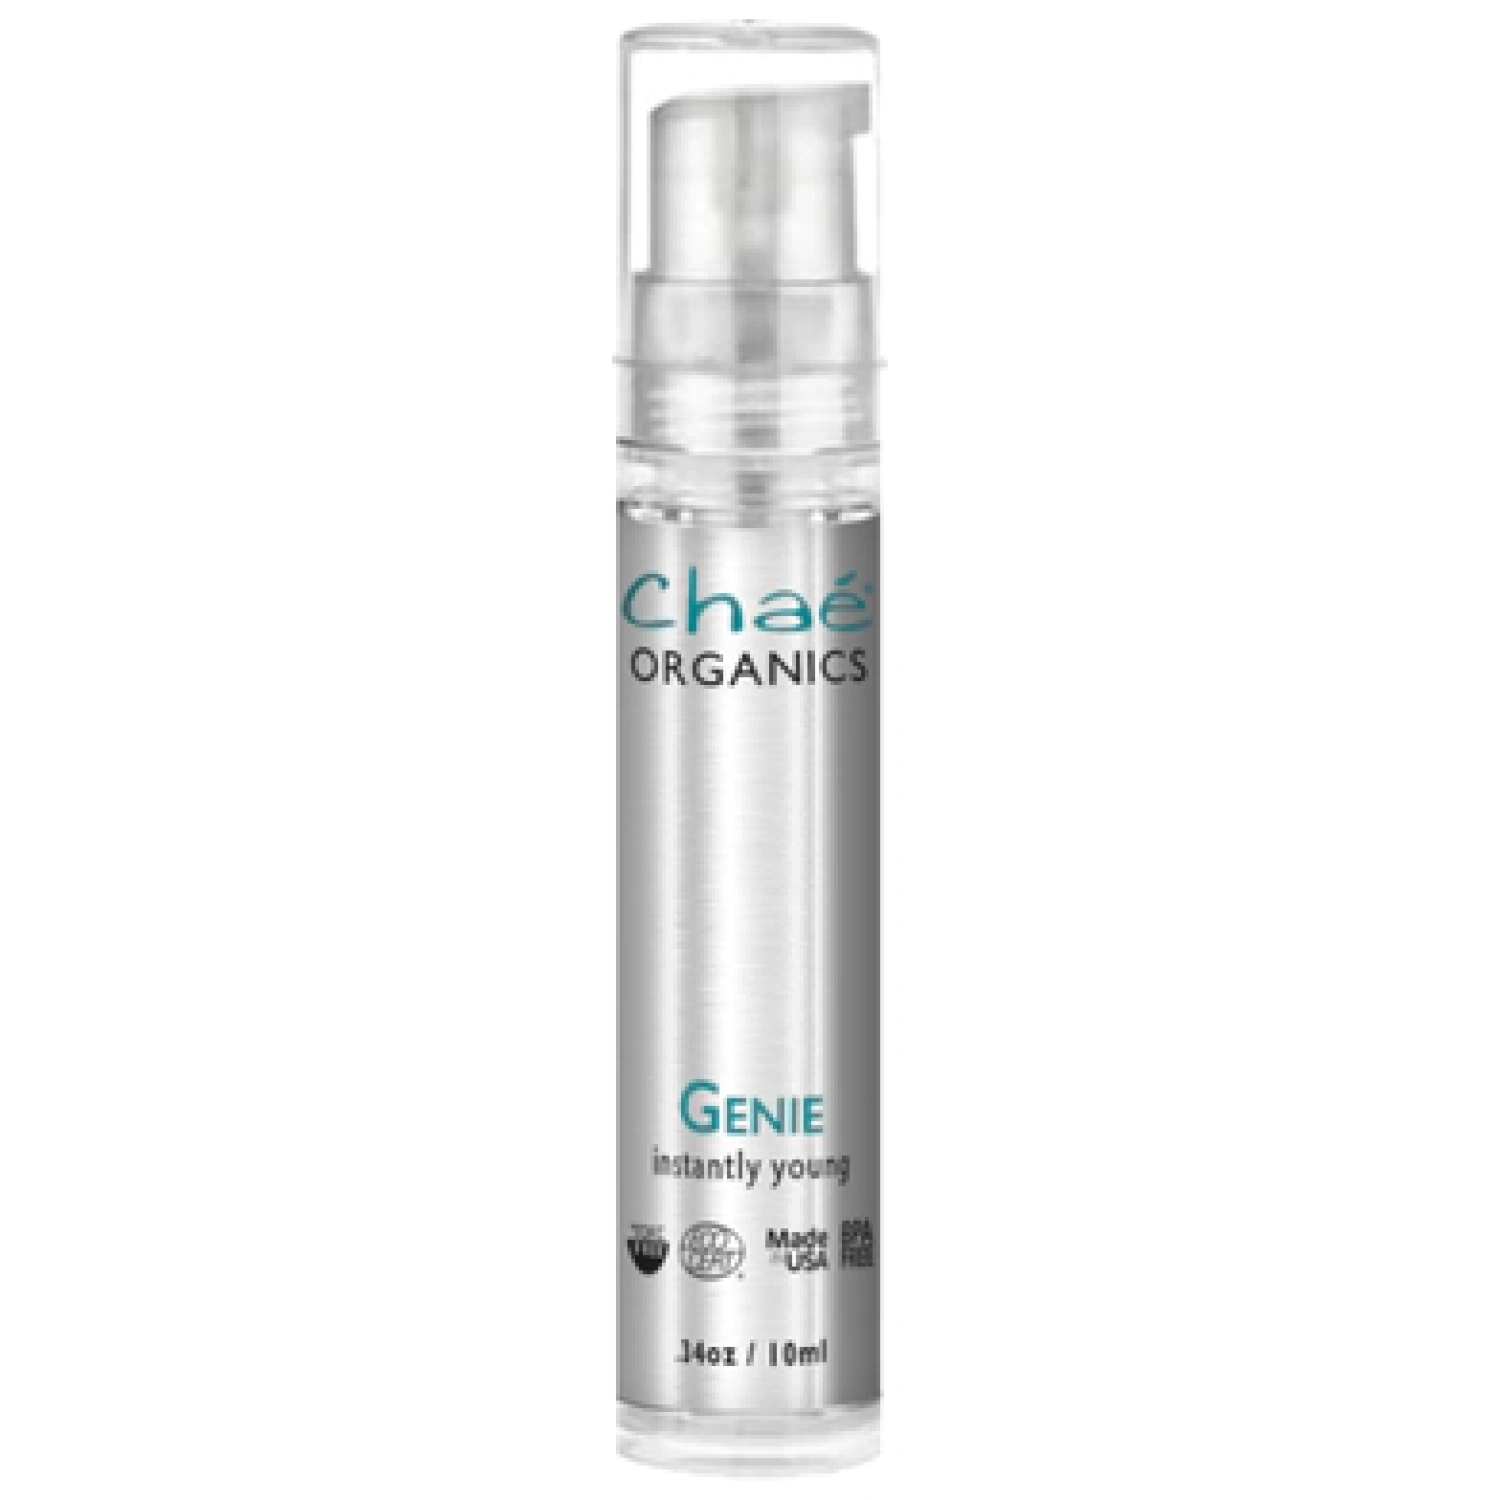 Organic Skin Care Chae Organics Genie 0.34oz